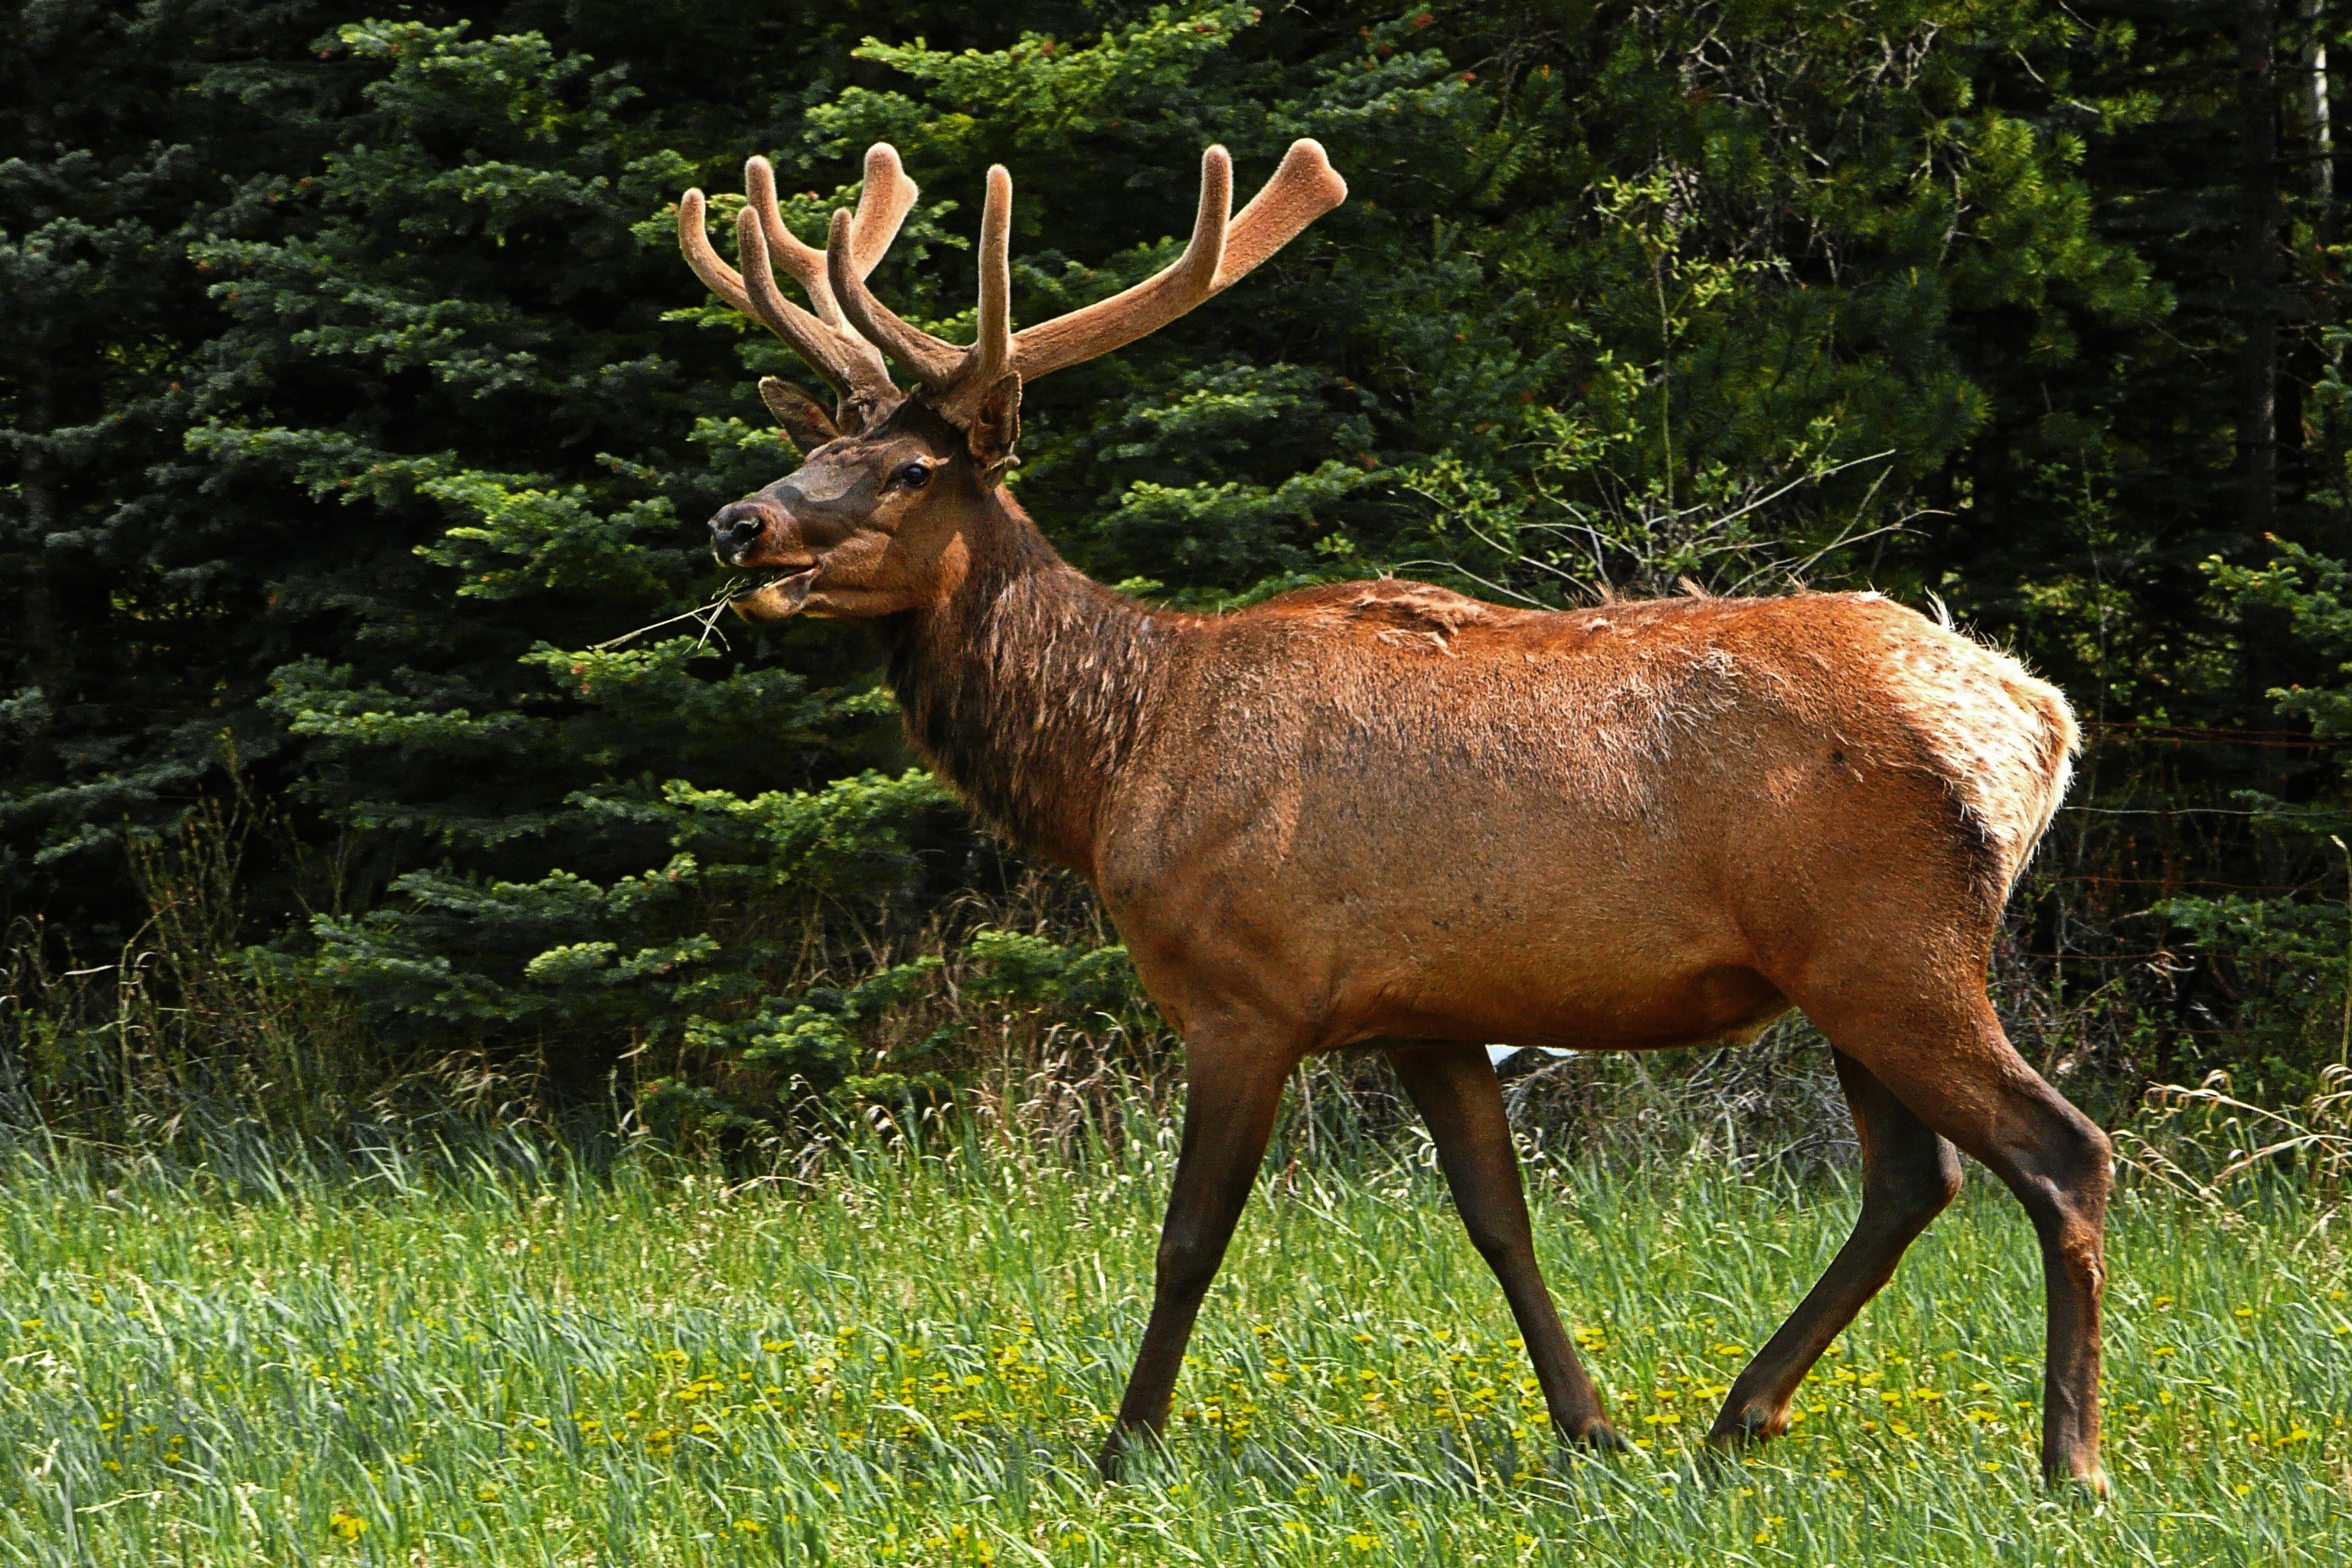 Wildlife, Elk, Nature, Deer, Antlers, animal wildlife, animals in the wild